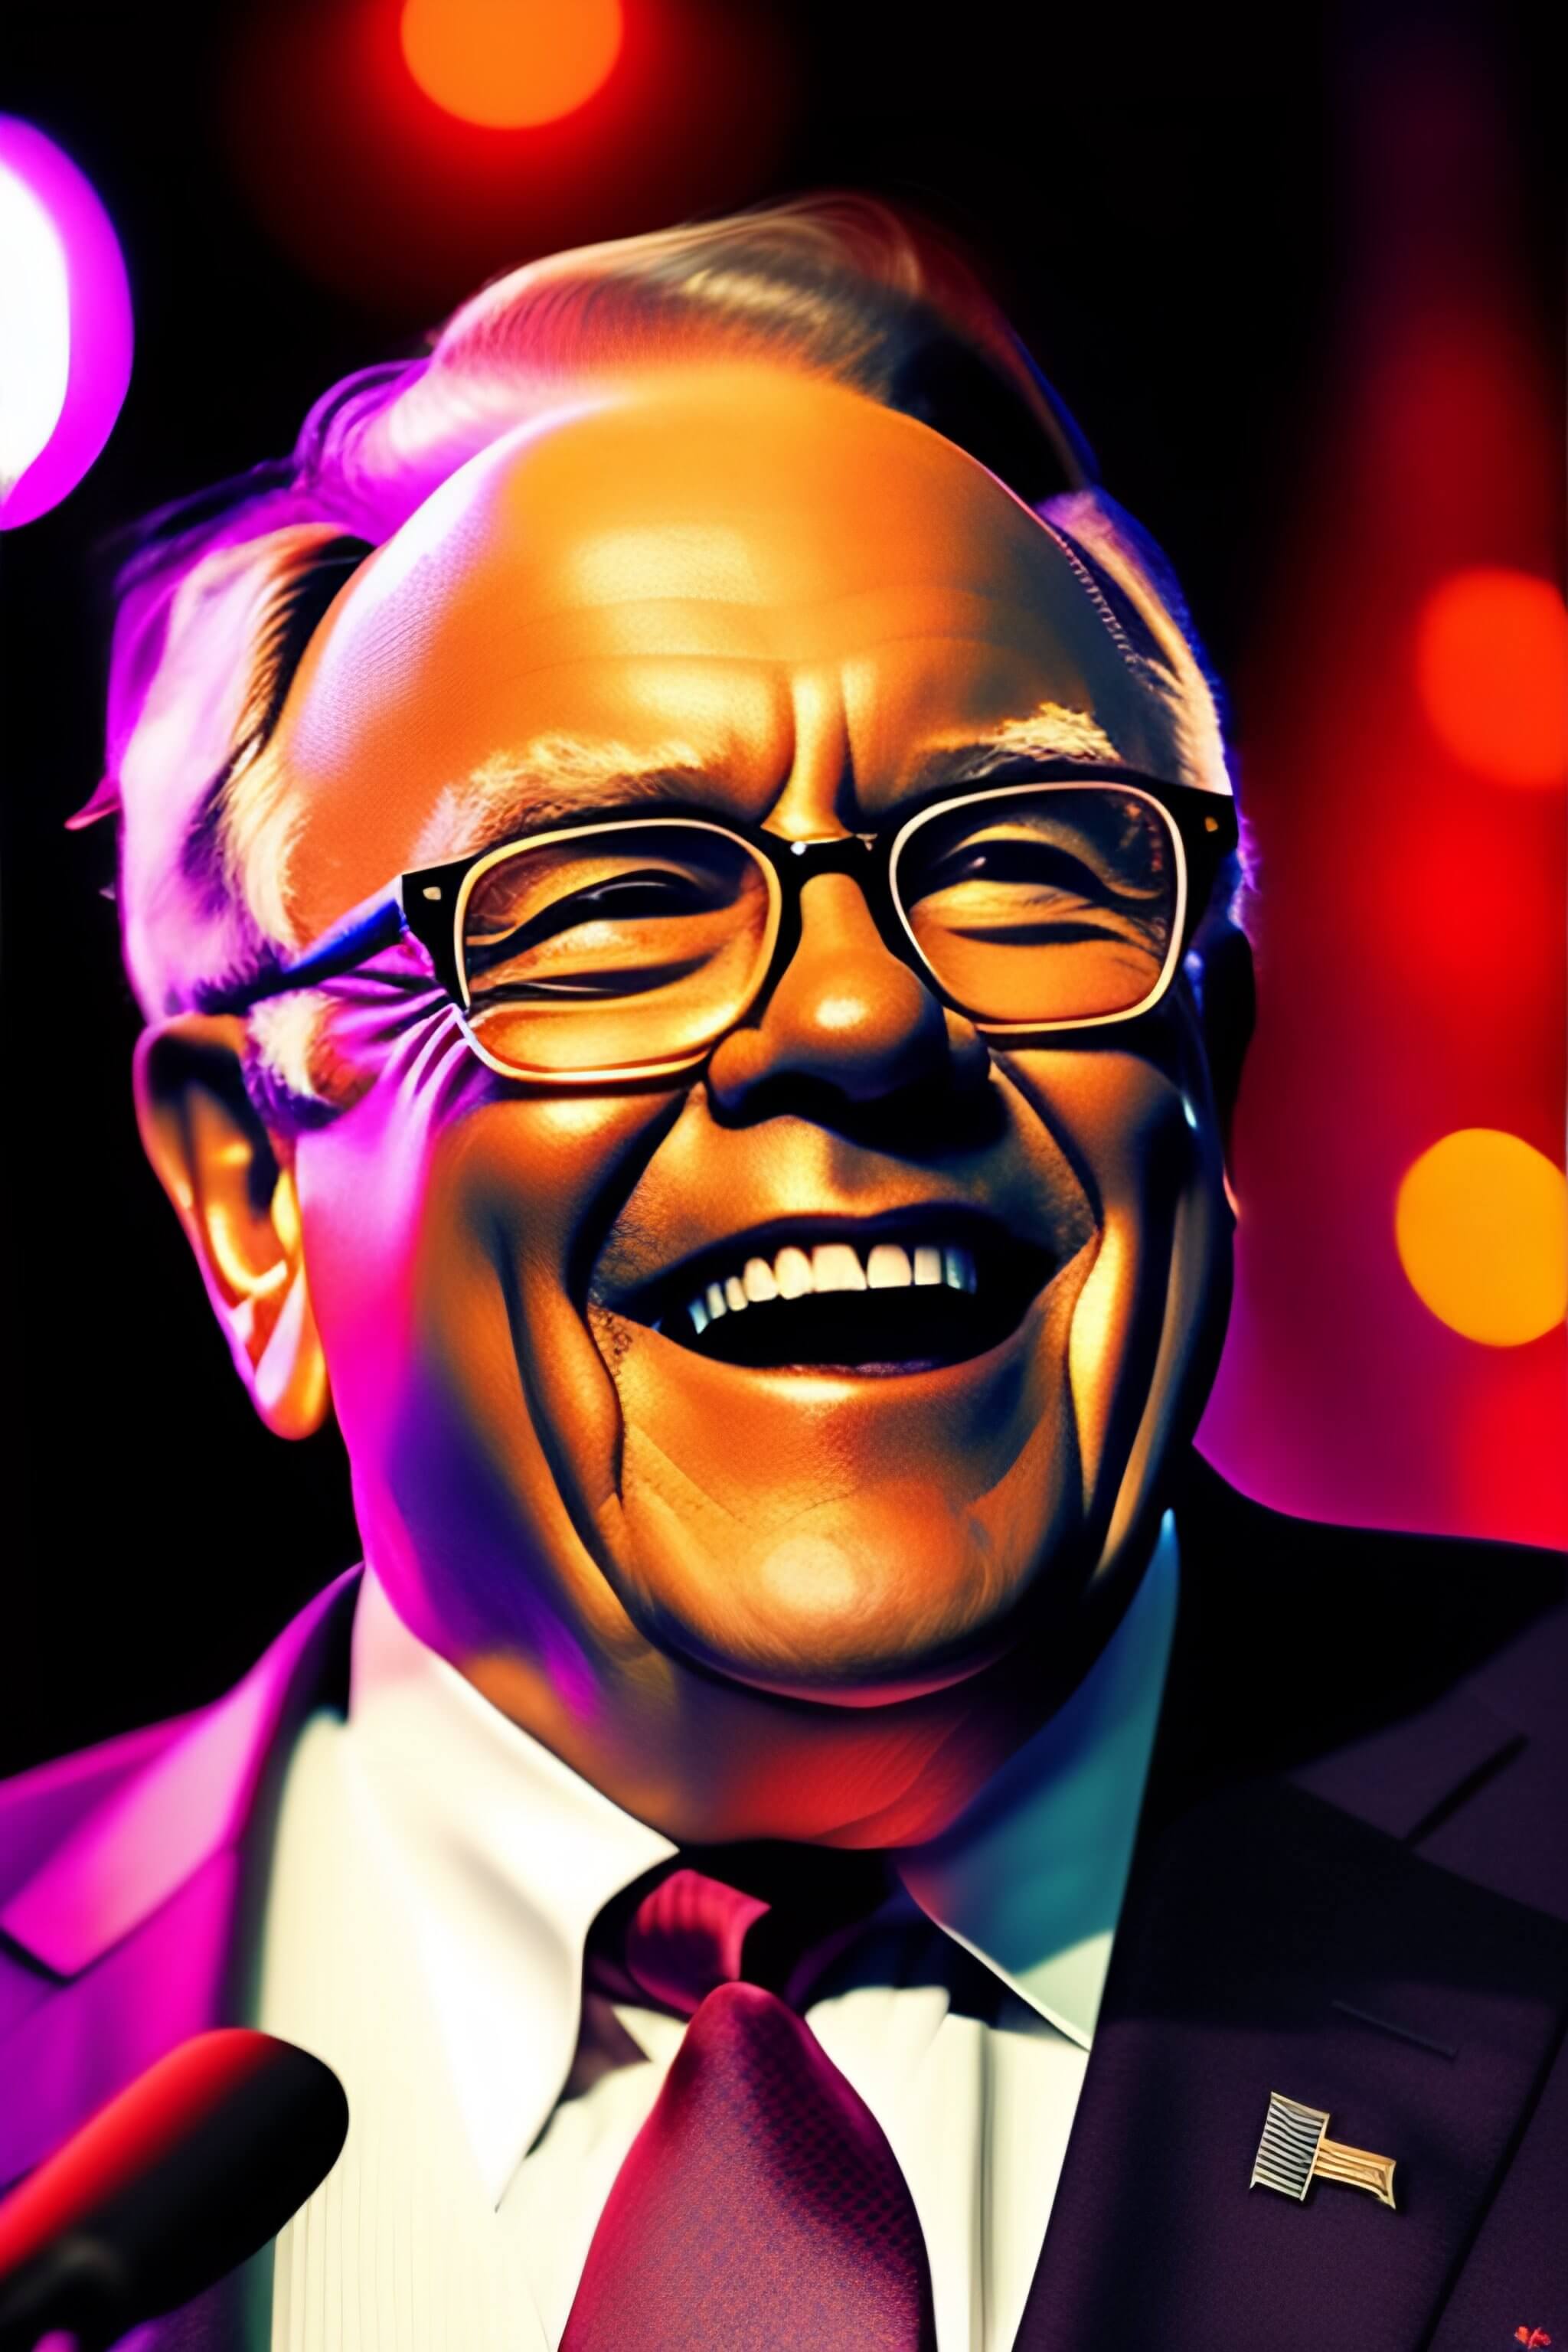 💼 Top Performing Assets According to Warren Buffett 💰